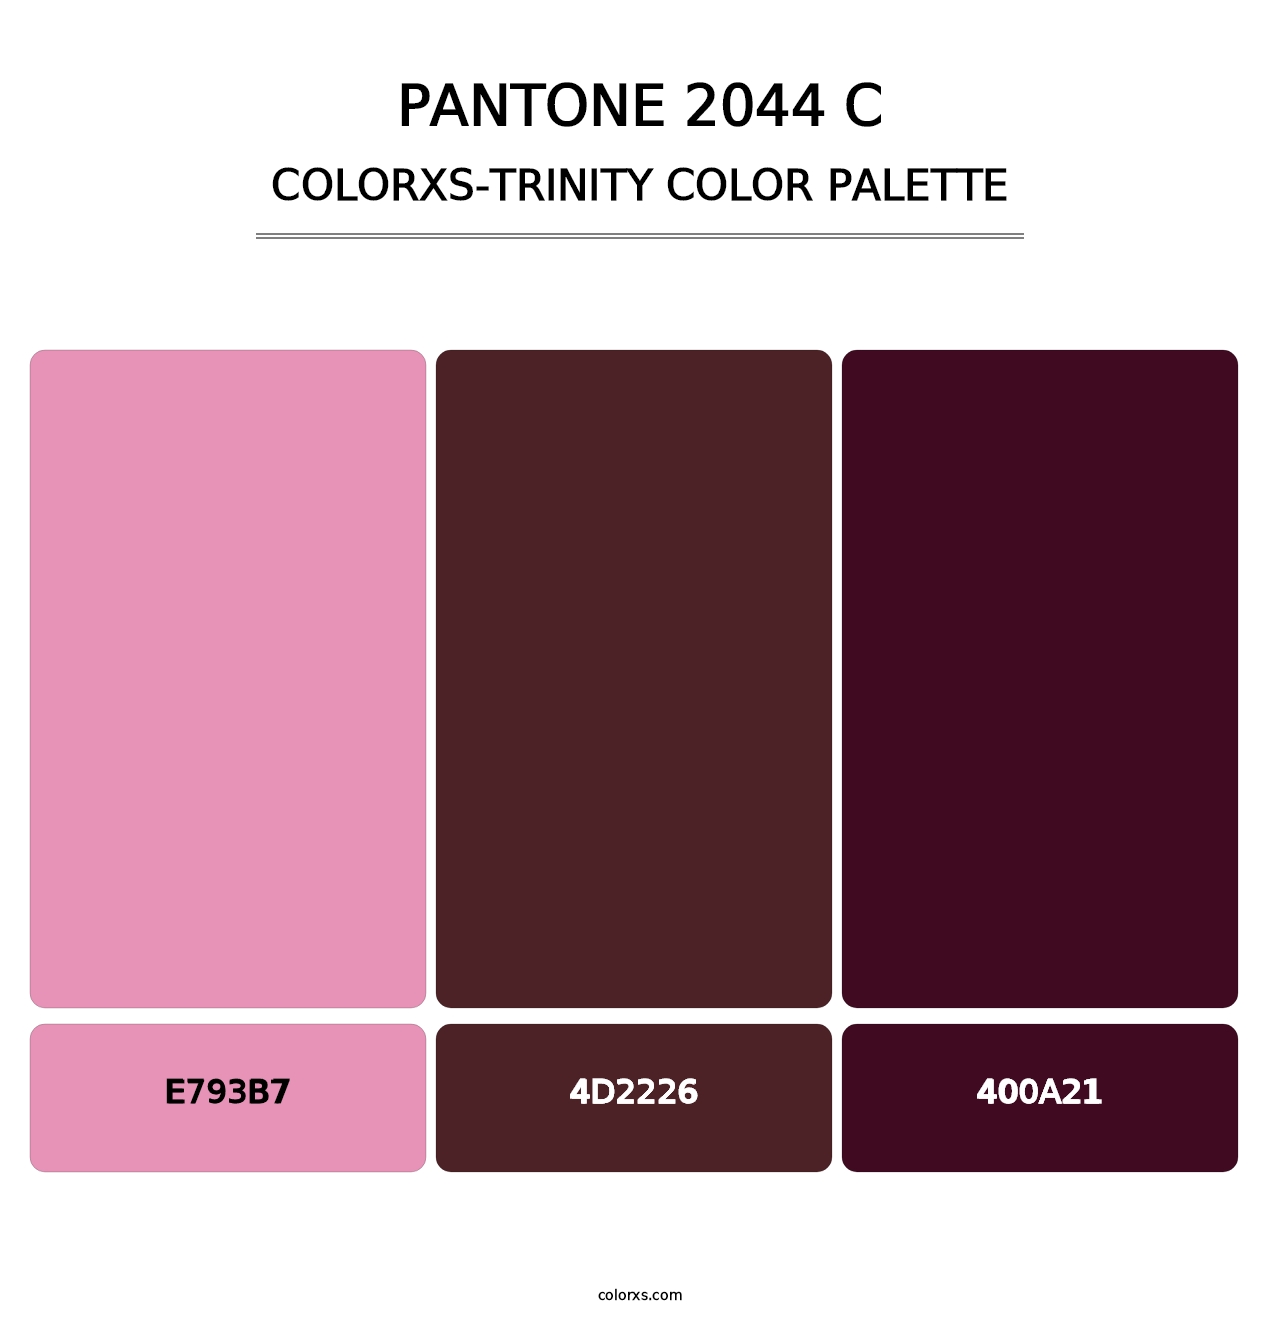 PANTONE 2044 C - Colorxs Trinity Palette